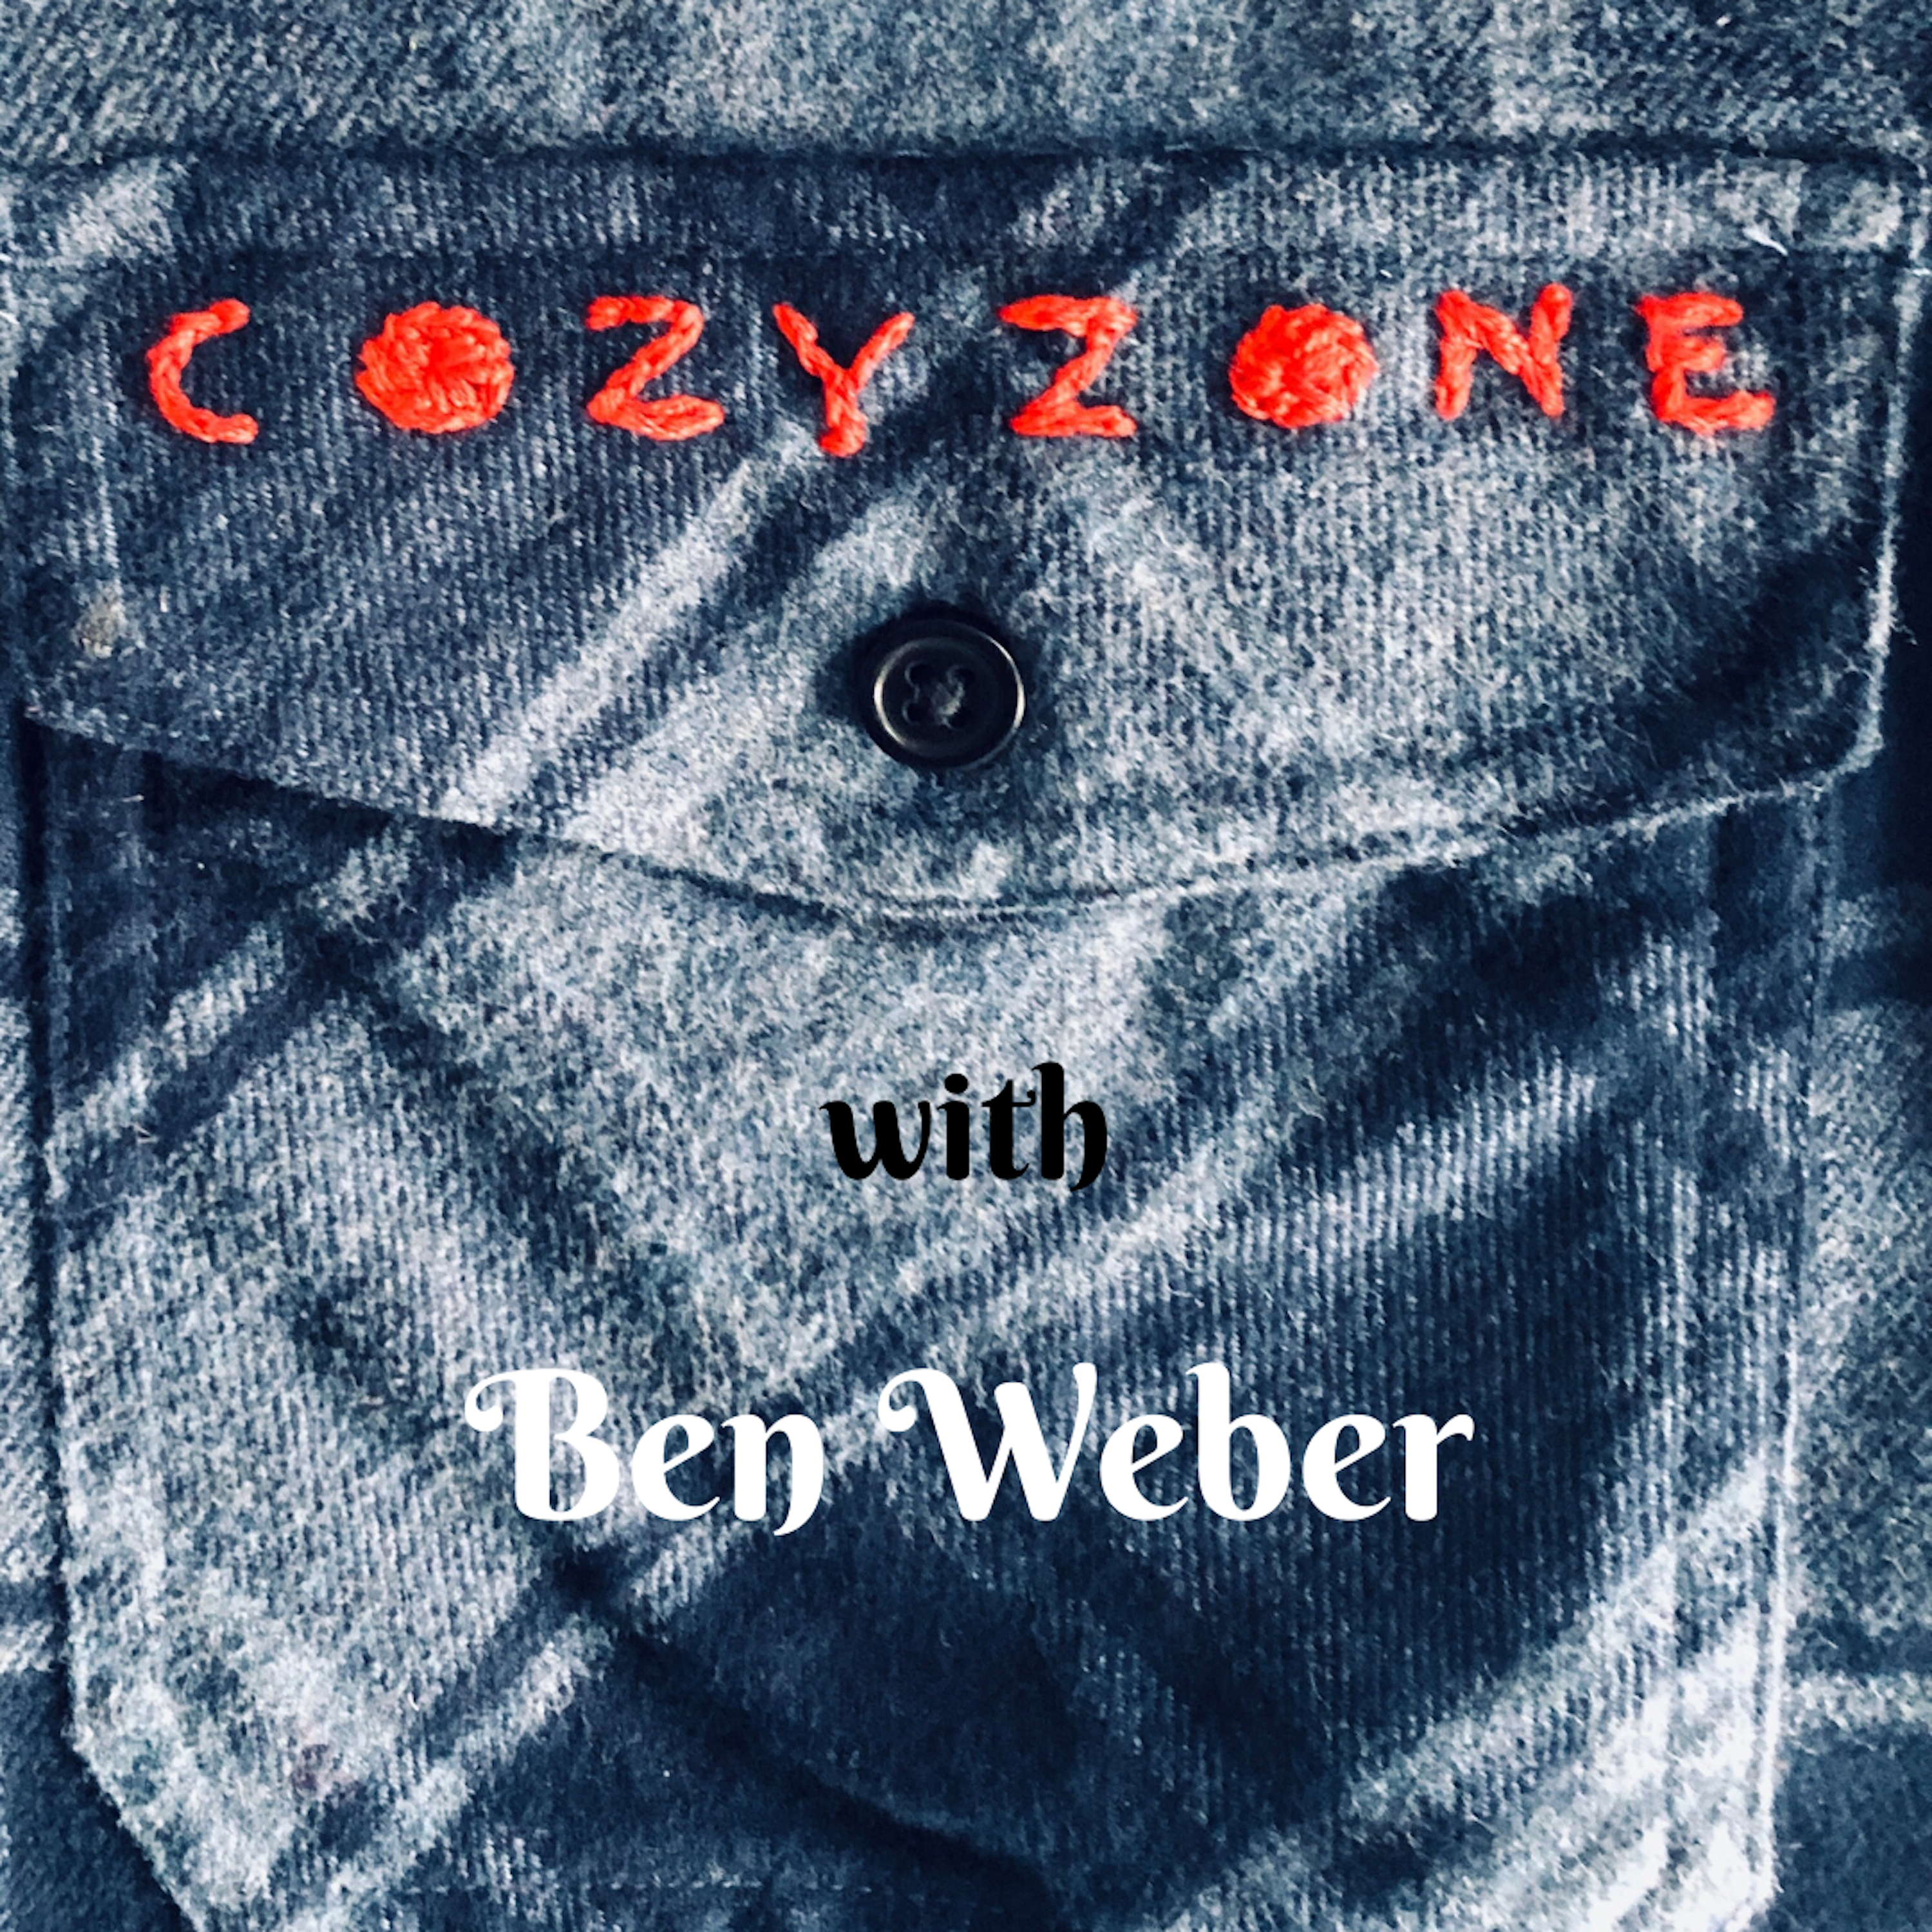 COZY ZONE with Ben Weber